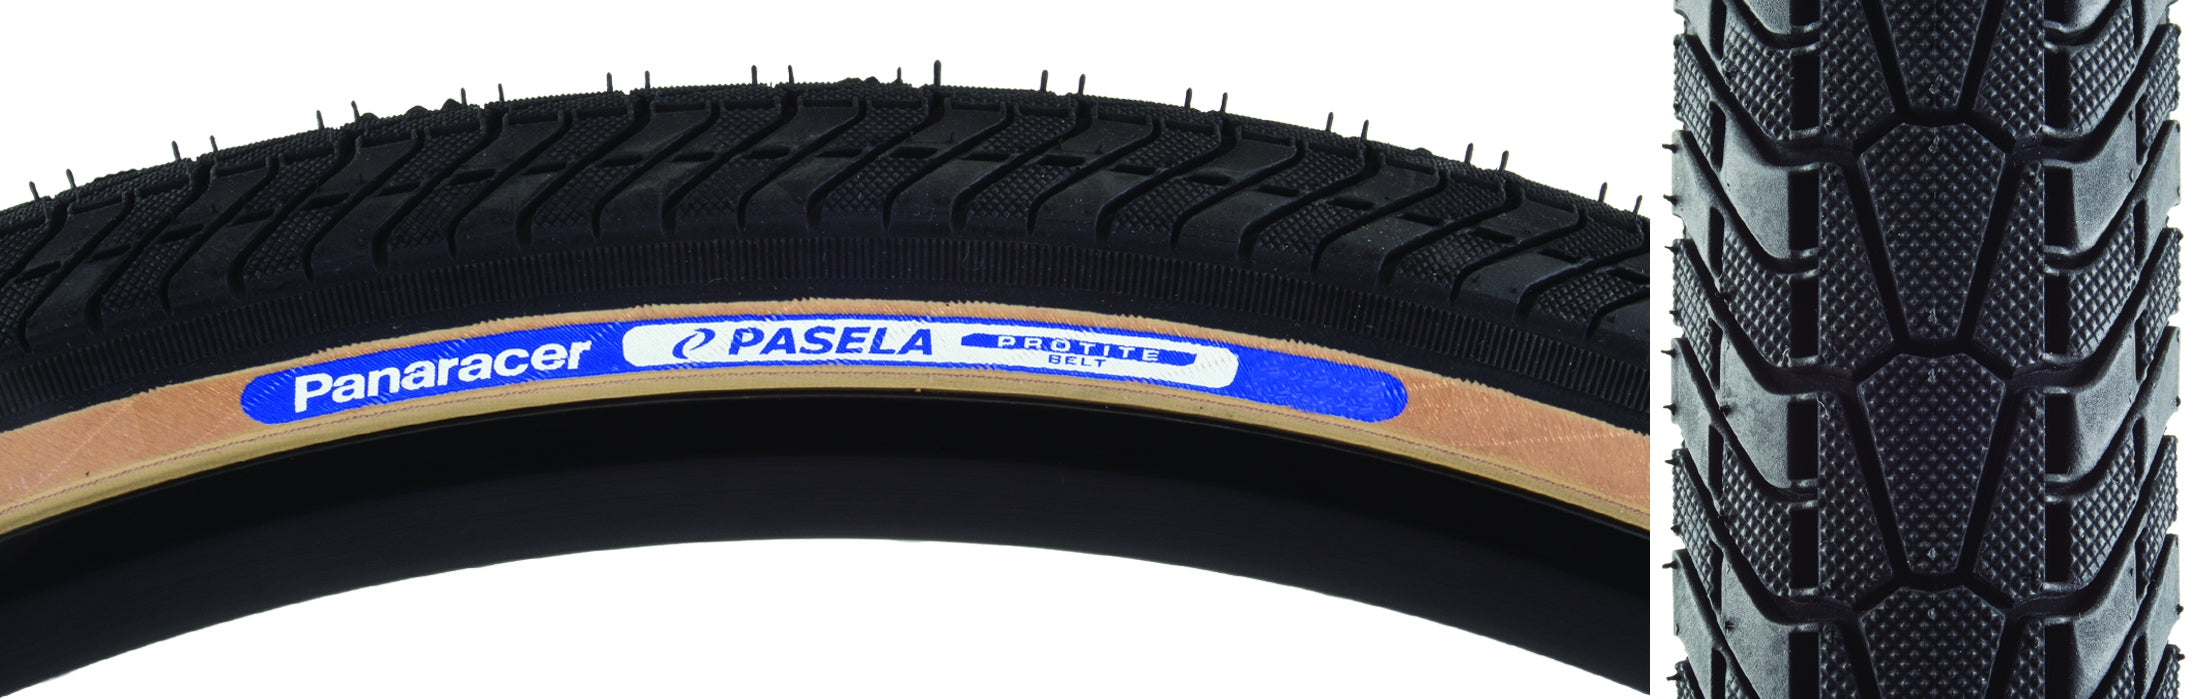 side view of pasela protite tire in black/tan